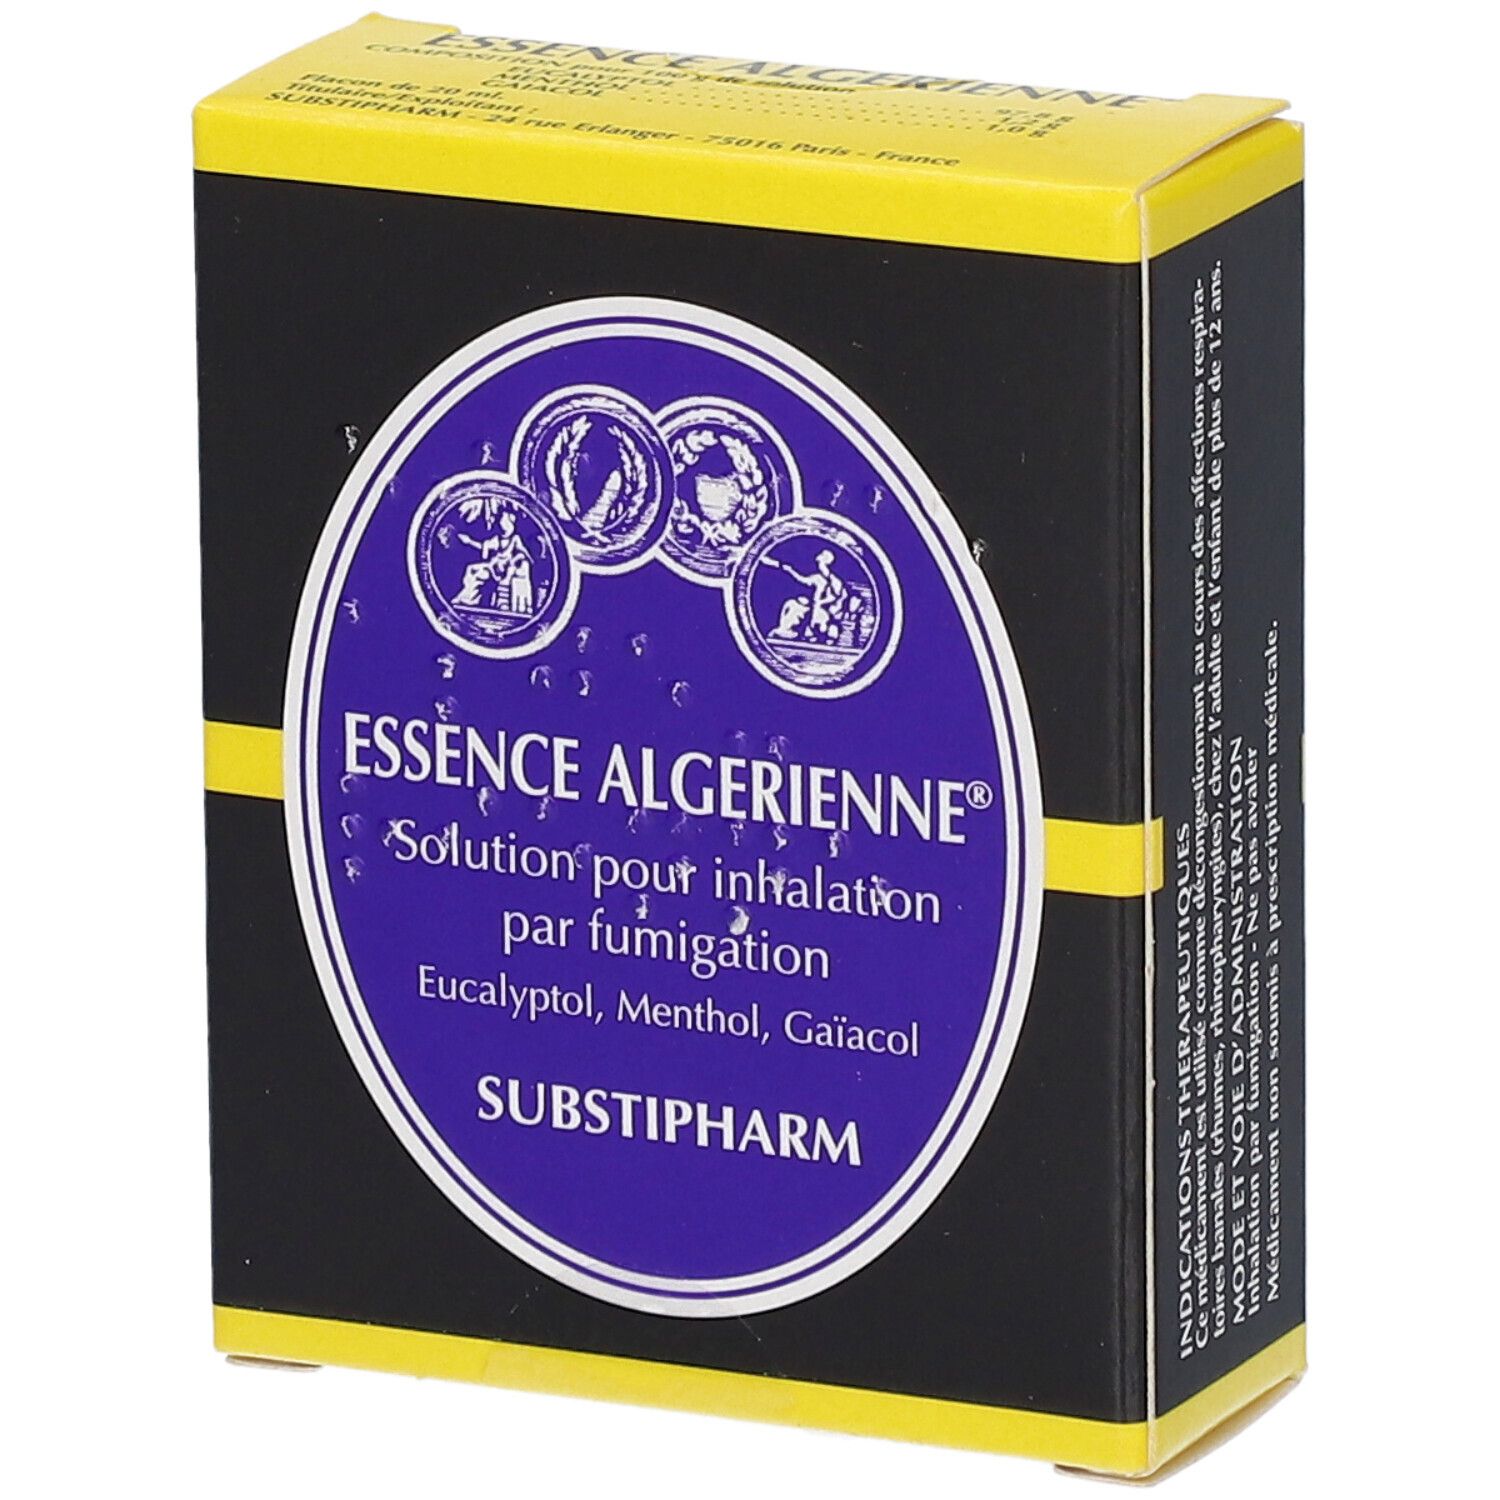 Essence Algérienne® Essence Algerienne® ml solution